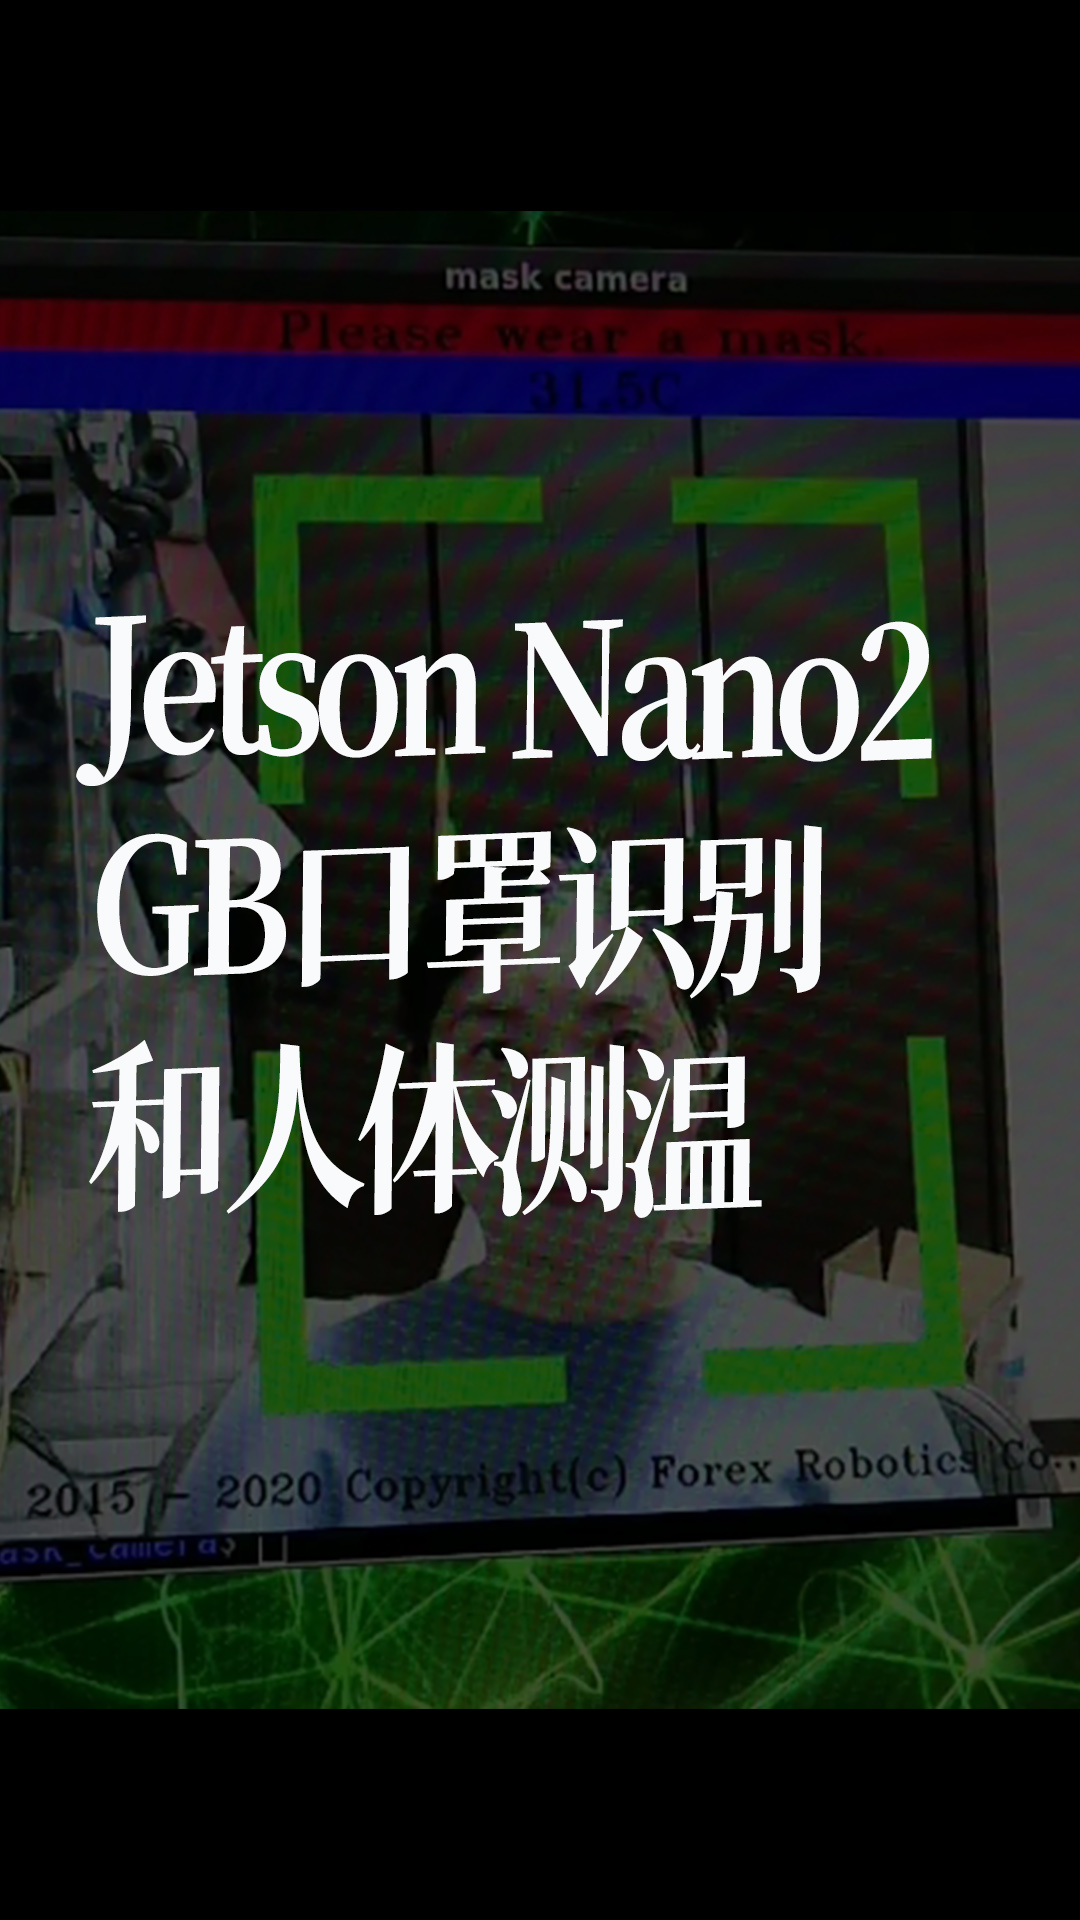 Jetson Nano2GB口罩识别和人体测温